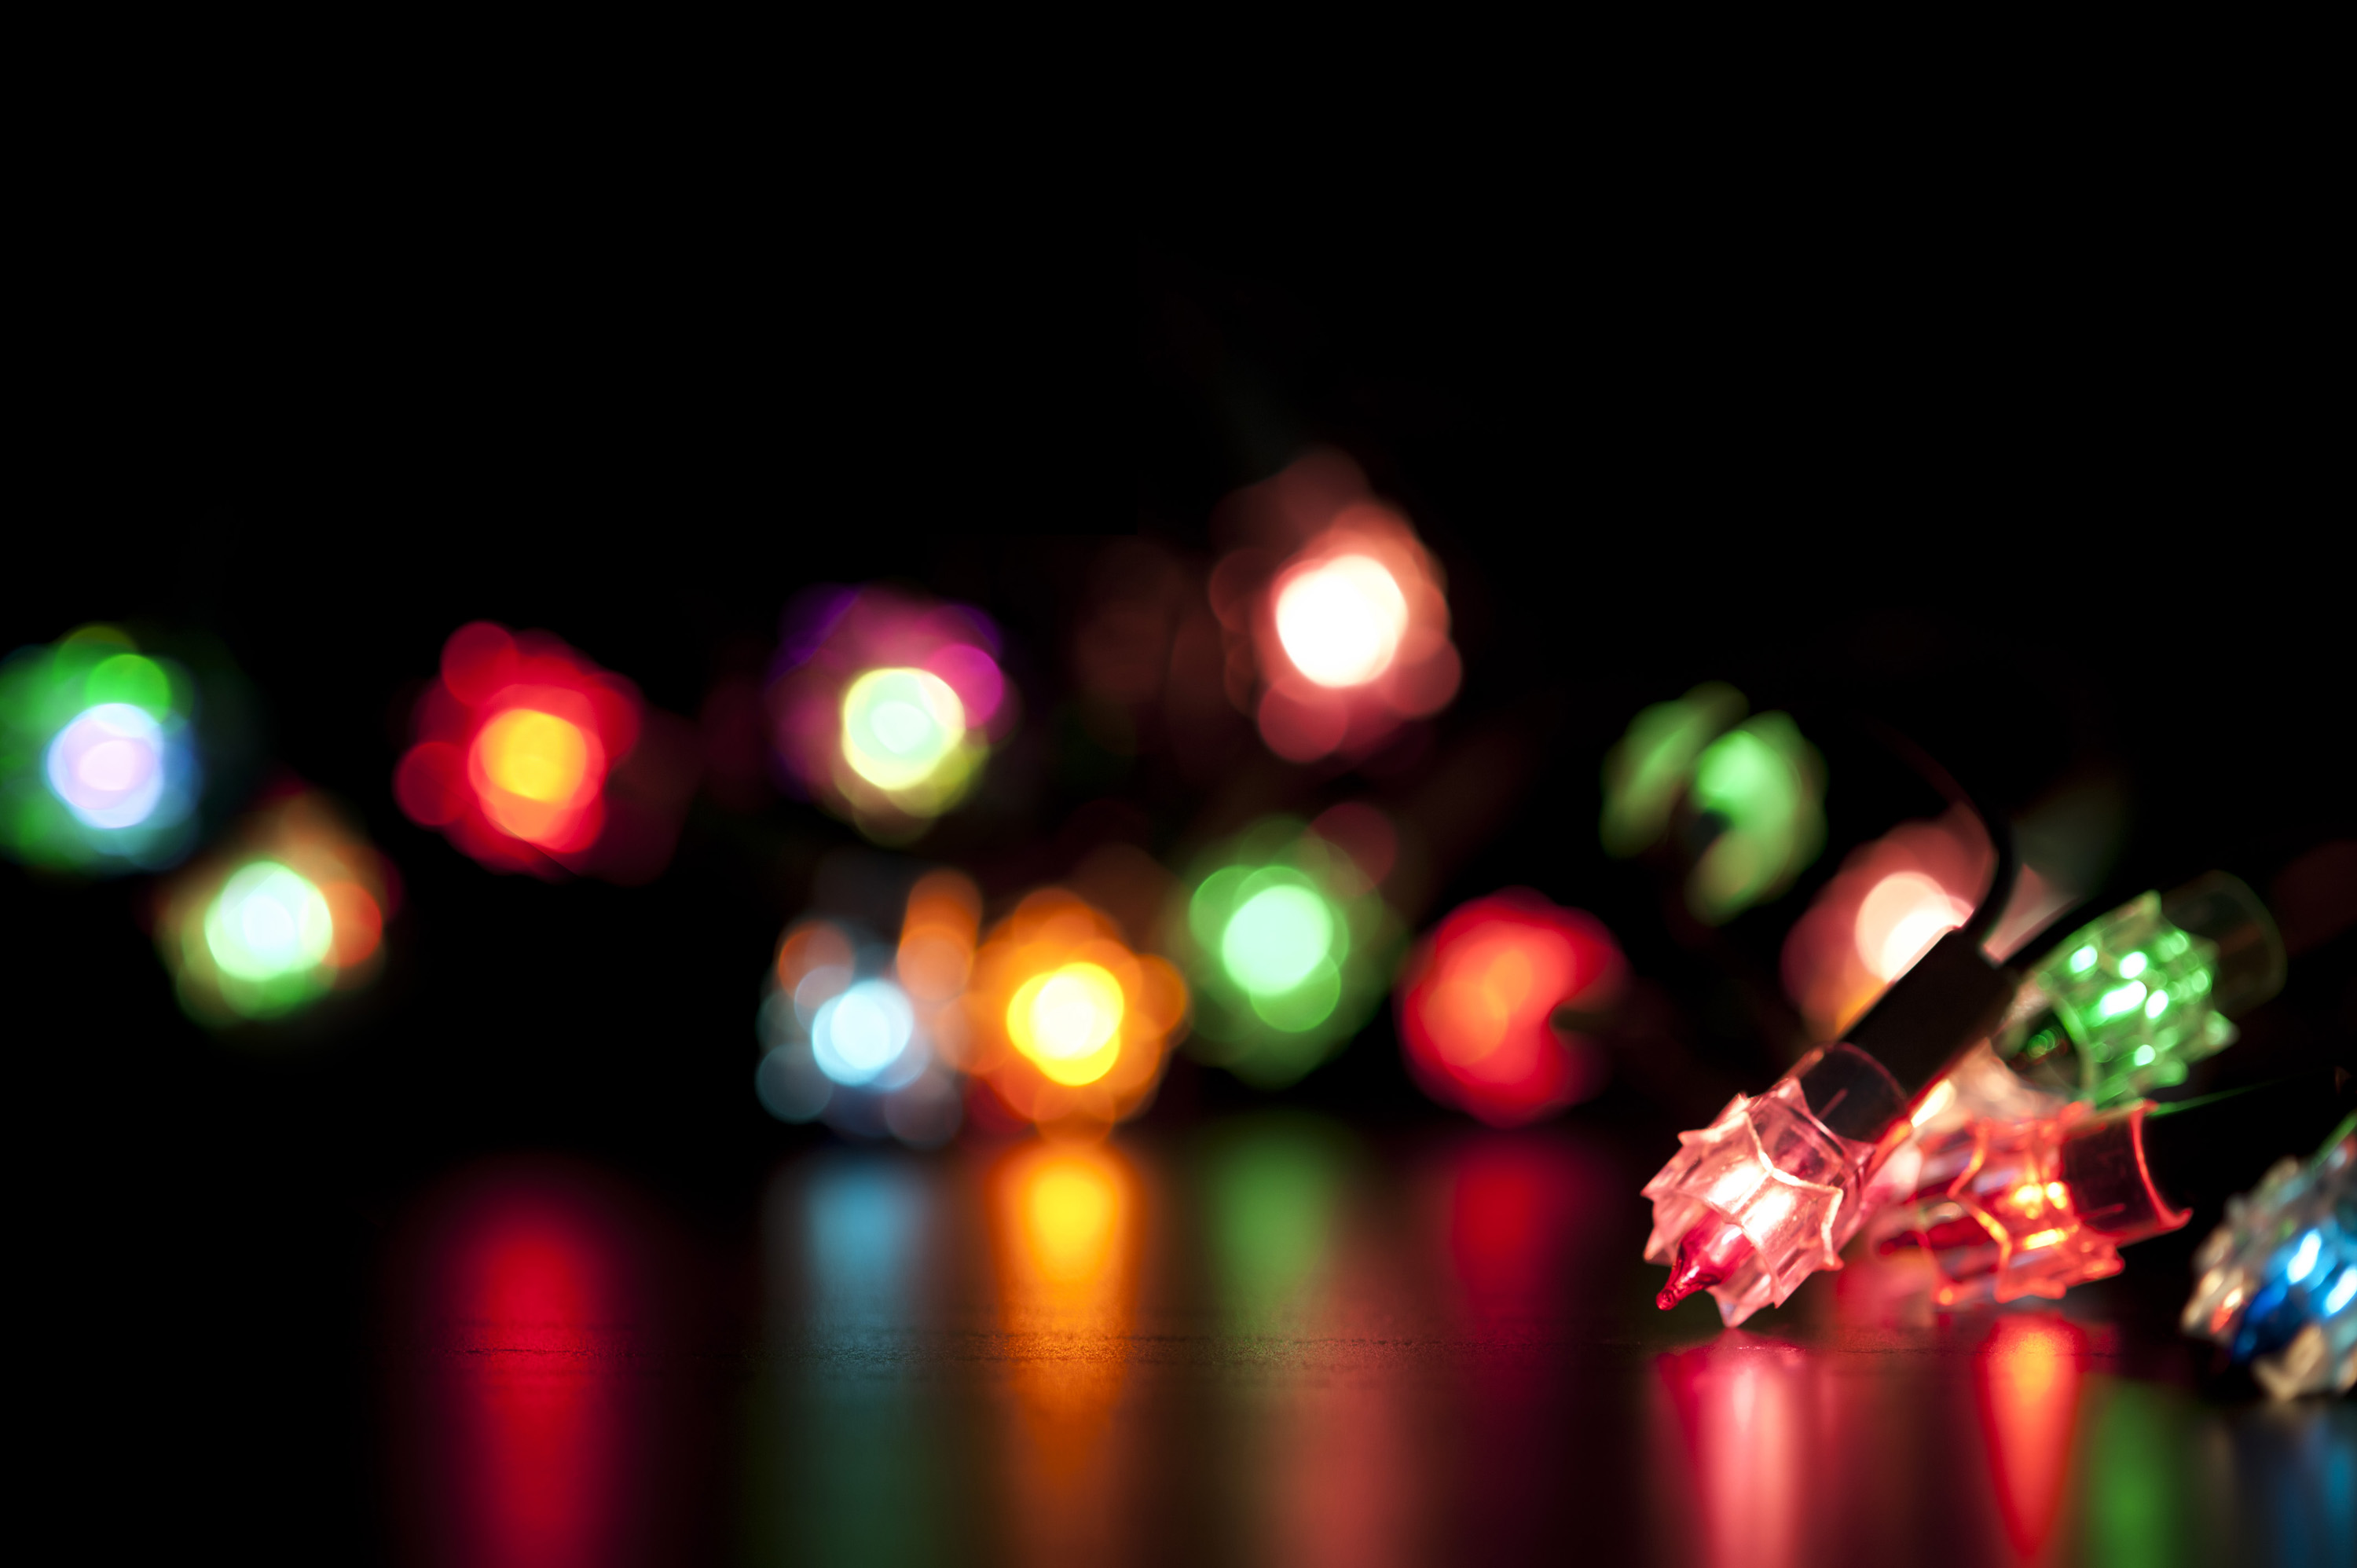 Blurred Christmas Lights Photography Xmas festive lights bokeh